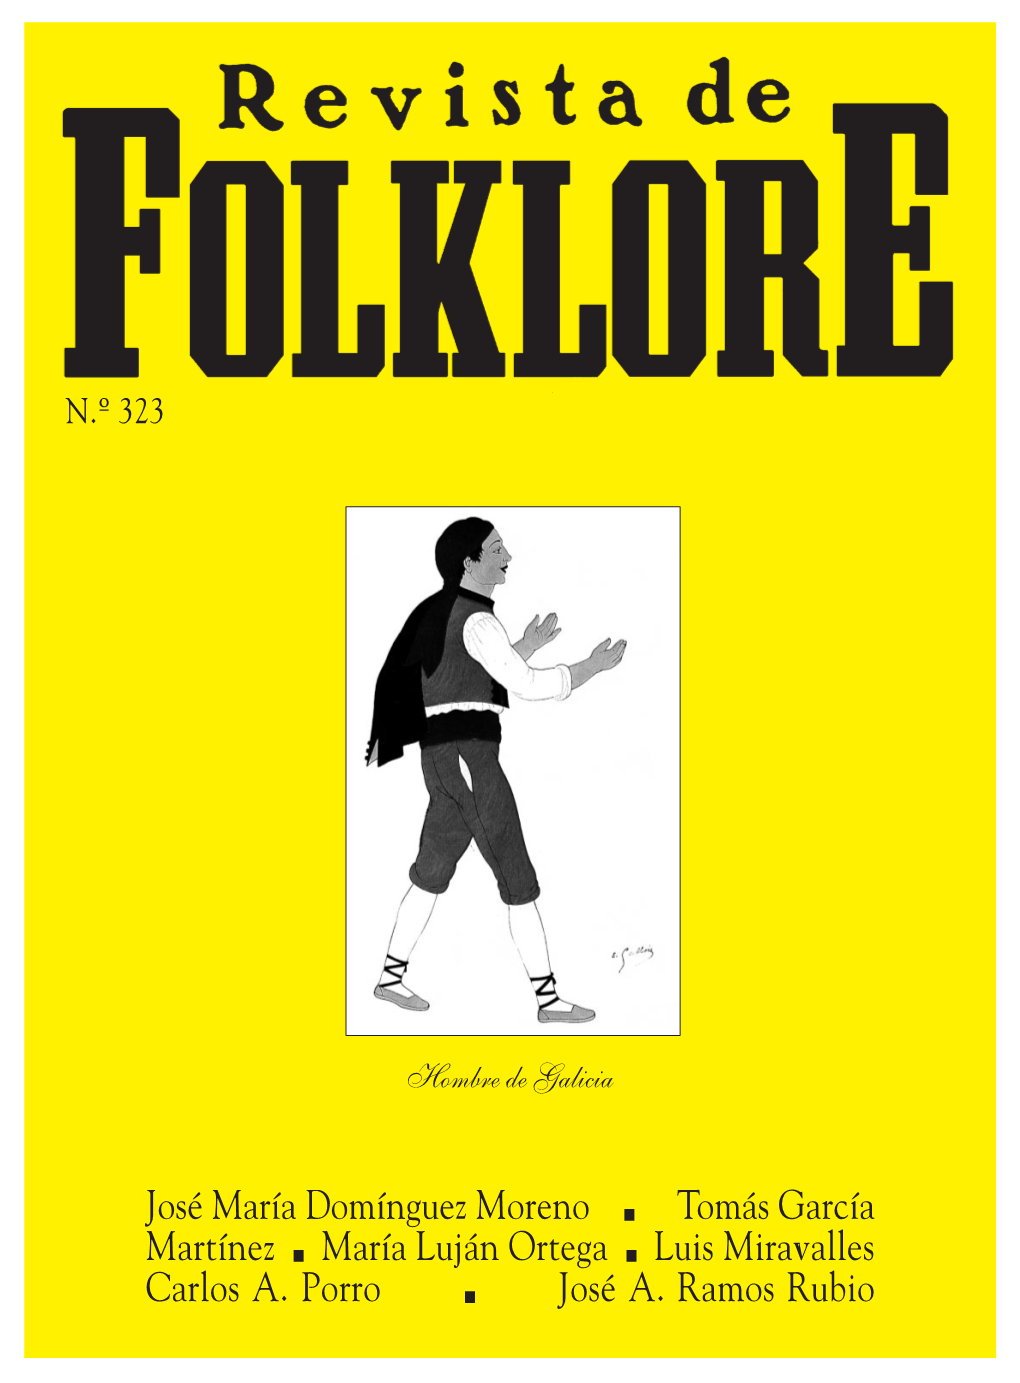 Folklore-Revista N¼323